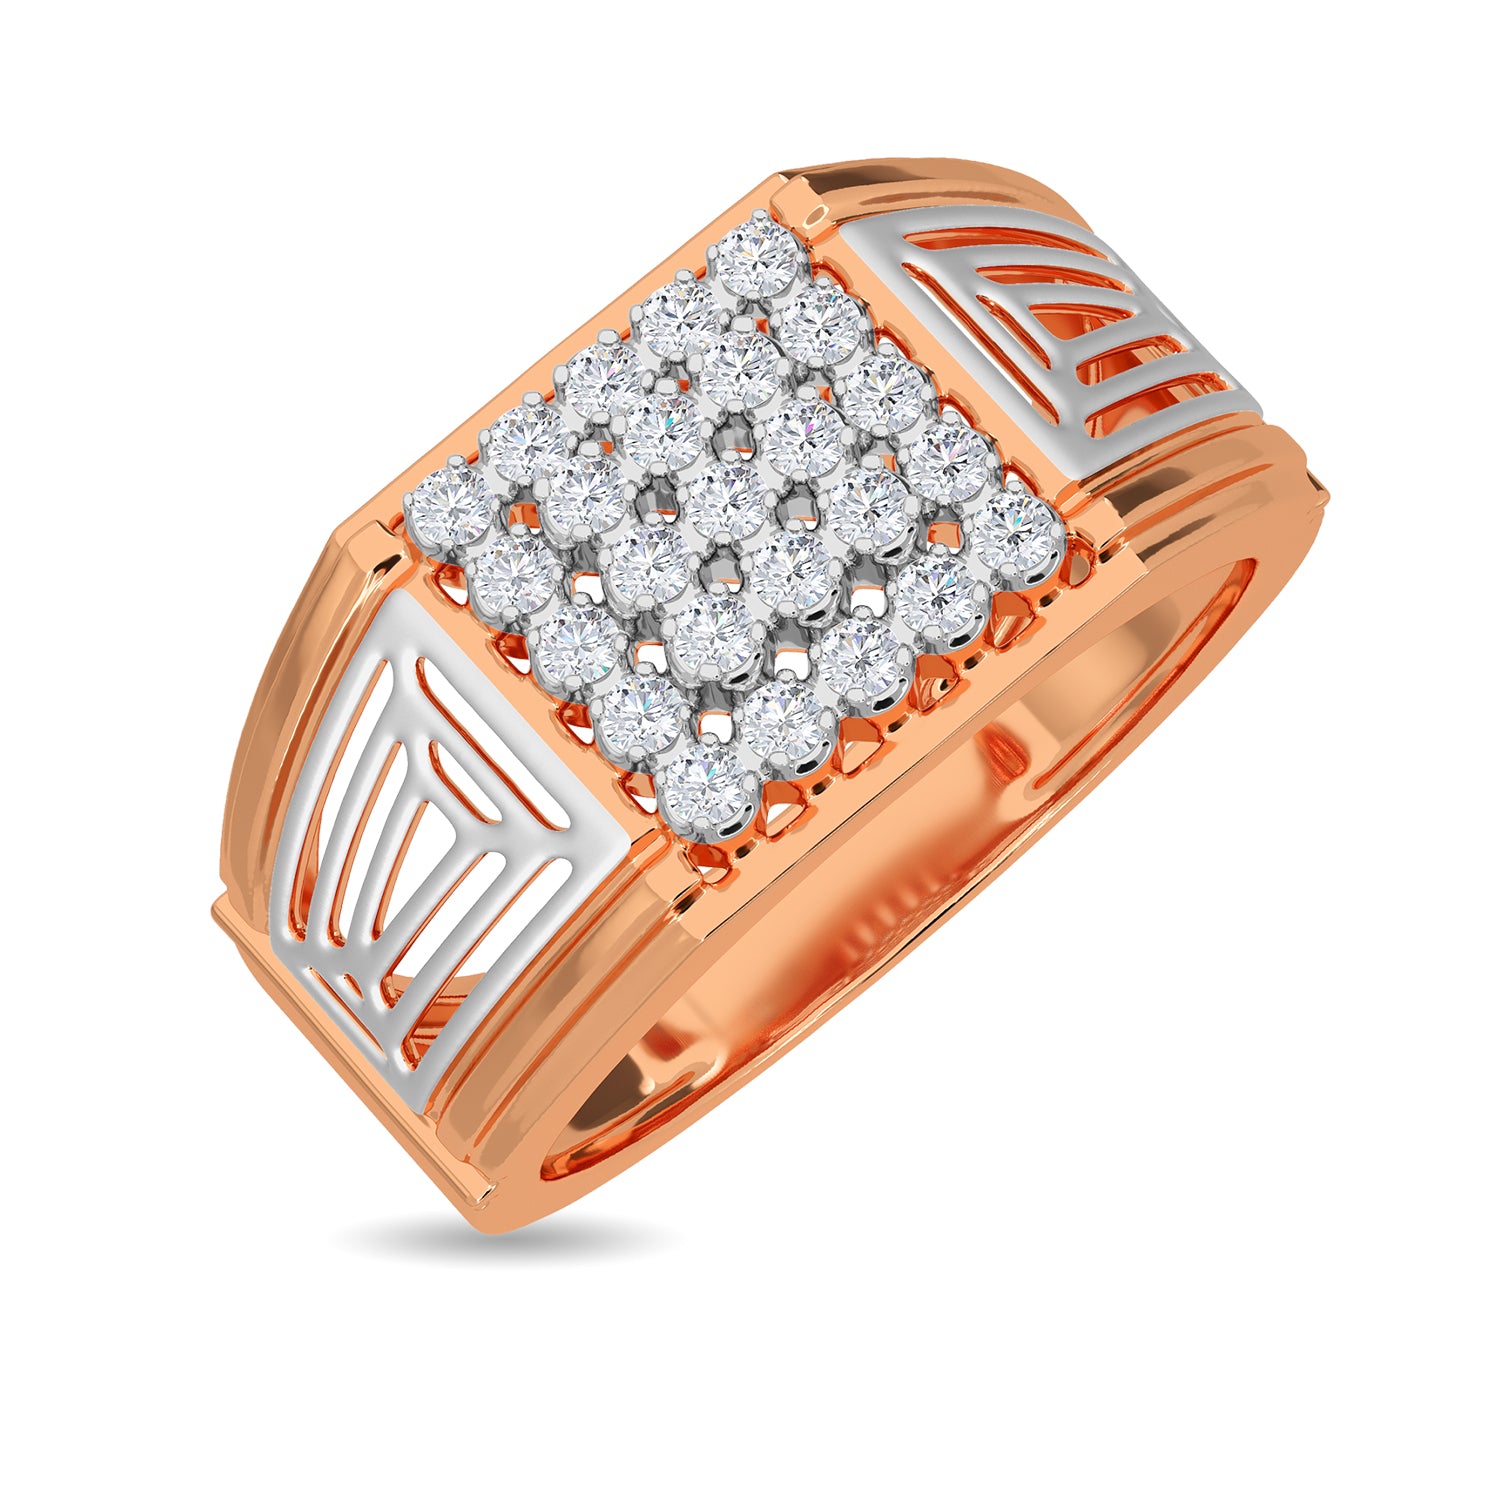 Stunning Bellerose Diamond Ring for Under 30K - Candere by Kalyan Jewellers